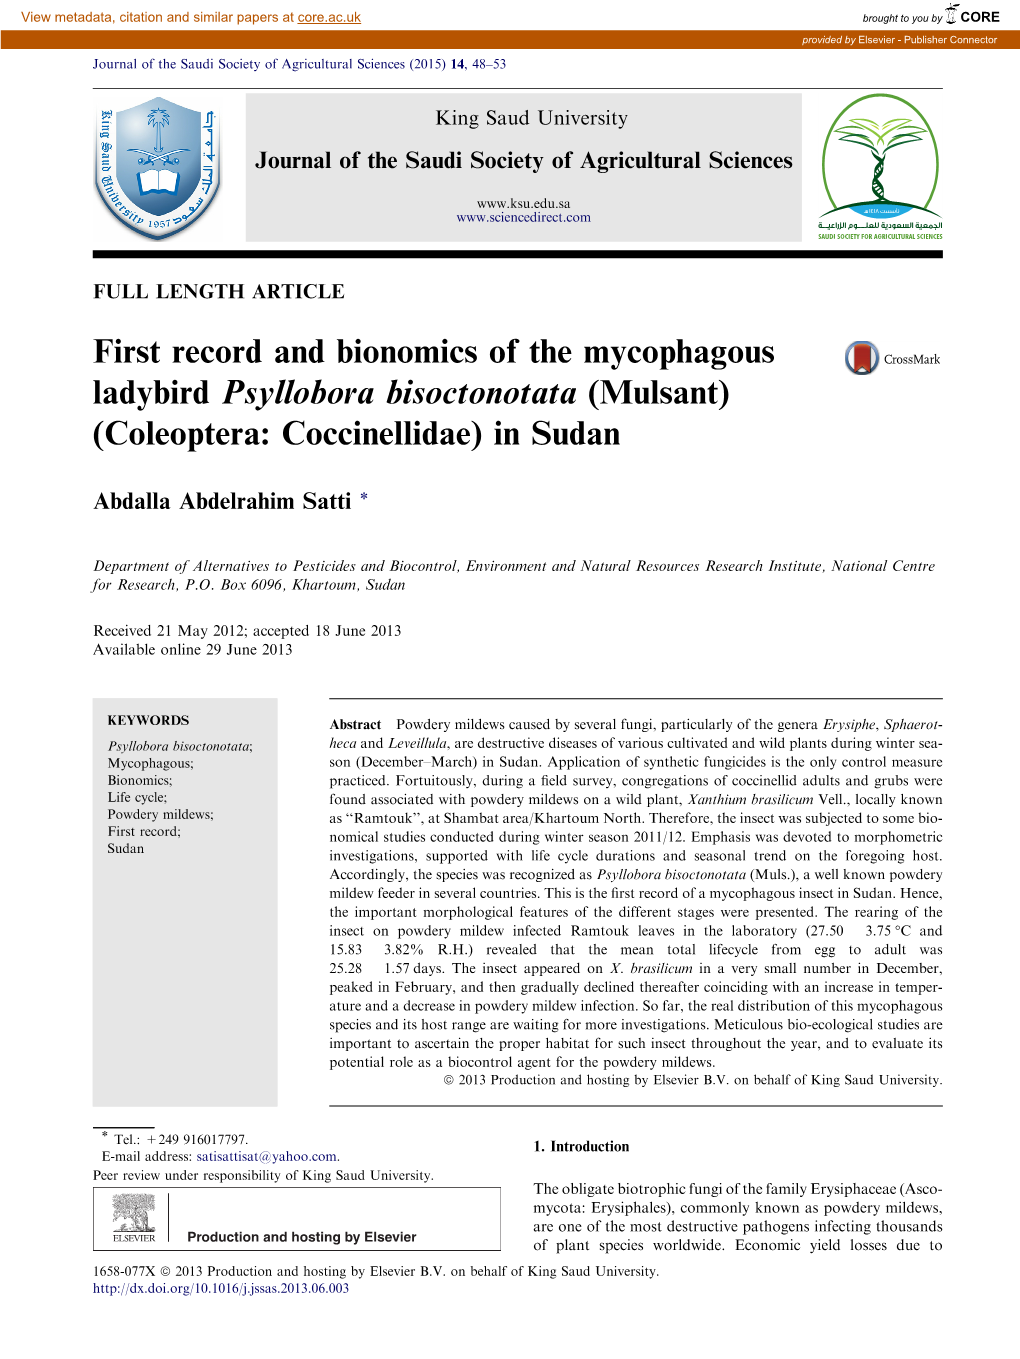 First Record and Bionomics of the Mycophagous Ladybird Psyllobora Bisoctonotata (Mulsant) (Coleoptera: Coccinellidae) in Sudan